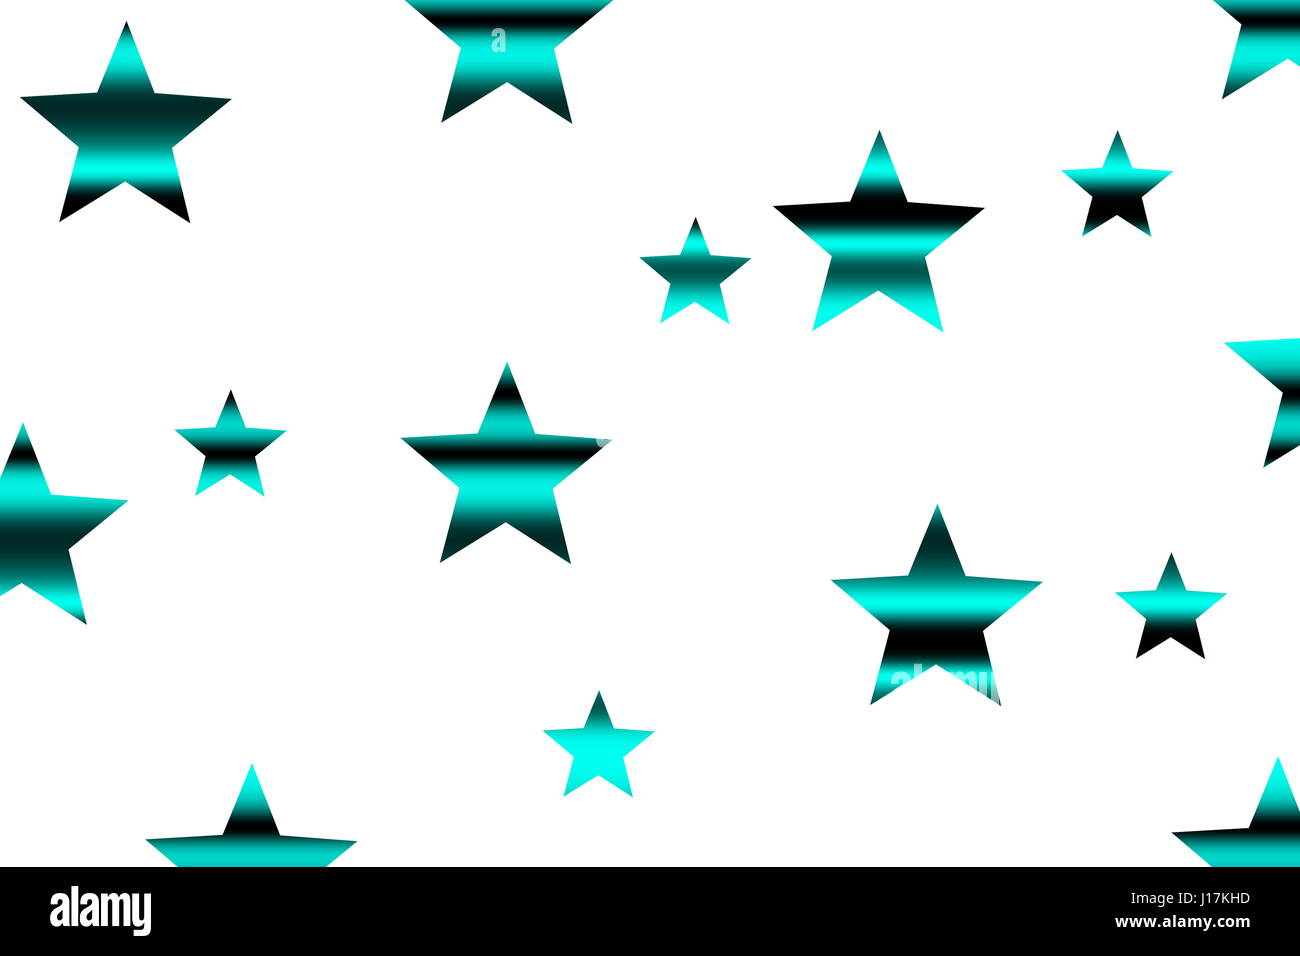 Horizontal striped stars Stock Photo